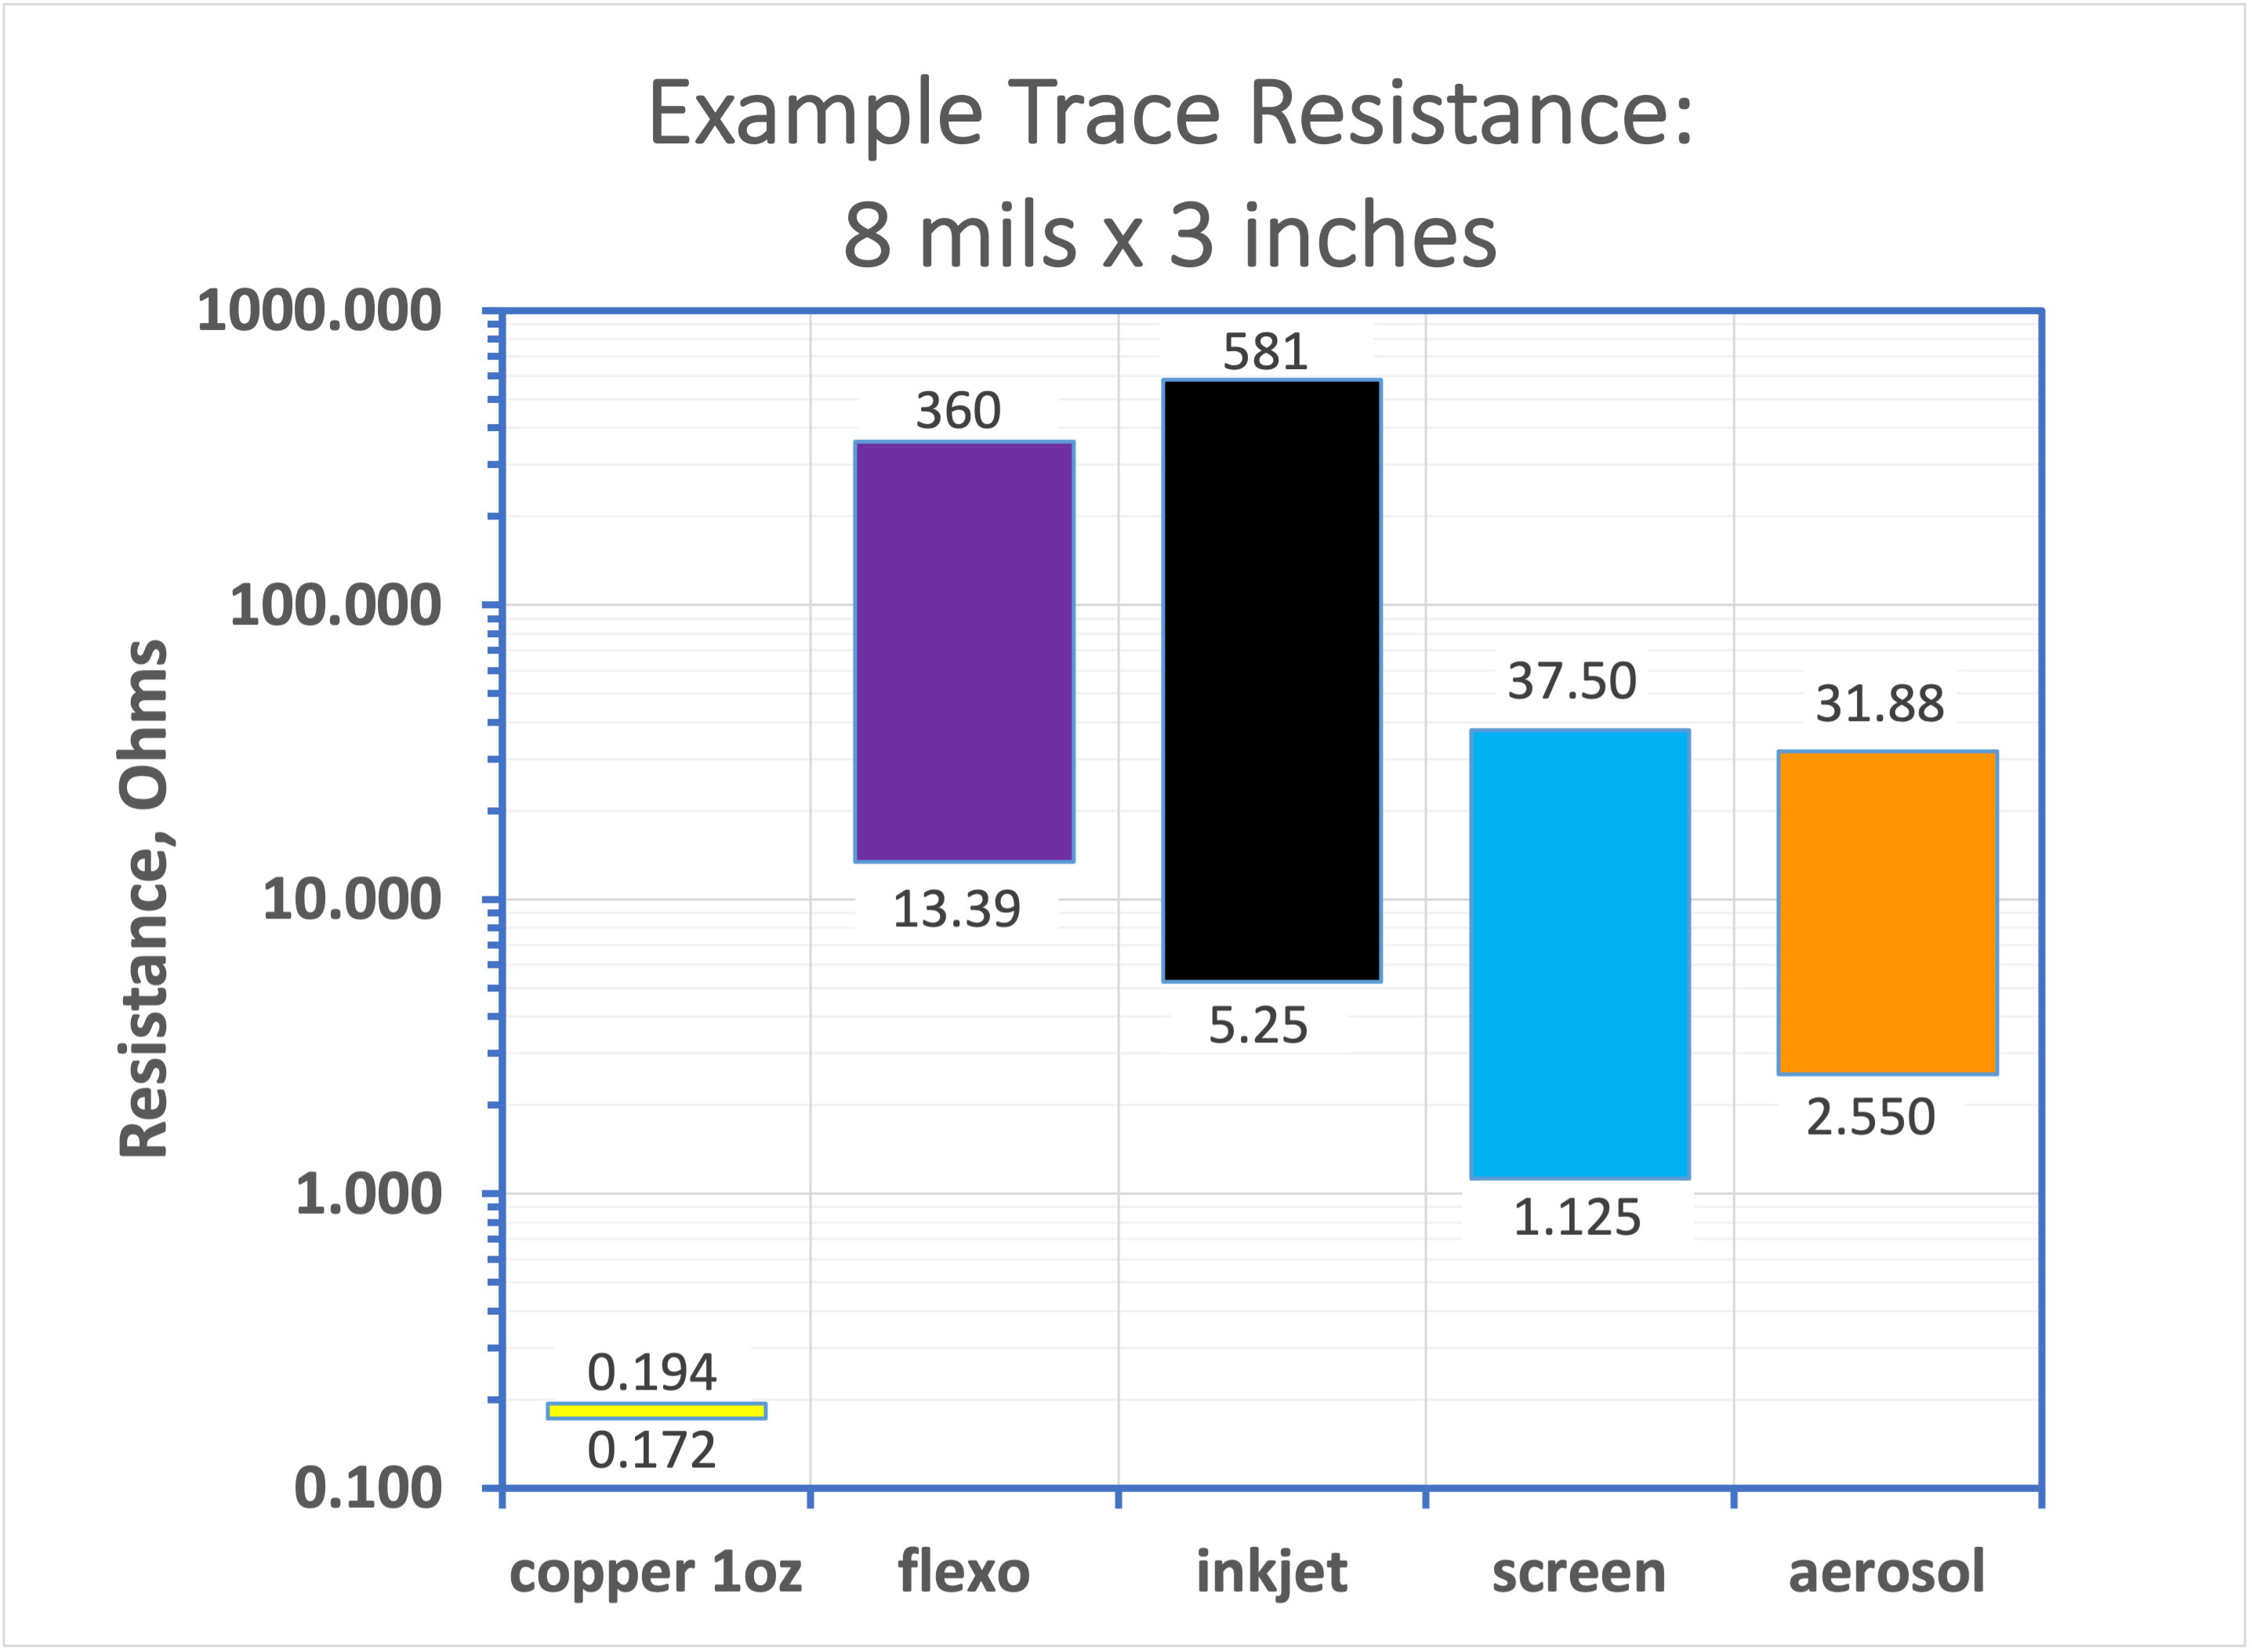 example trace resistance versus printing method